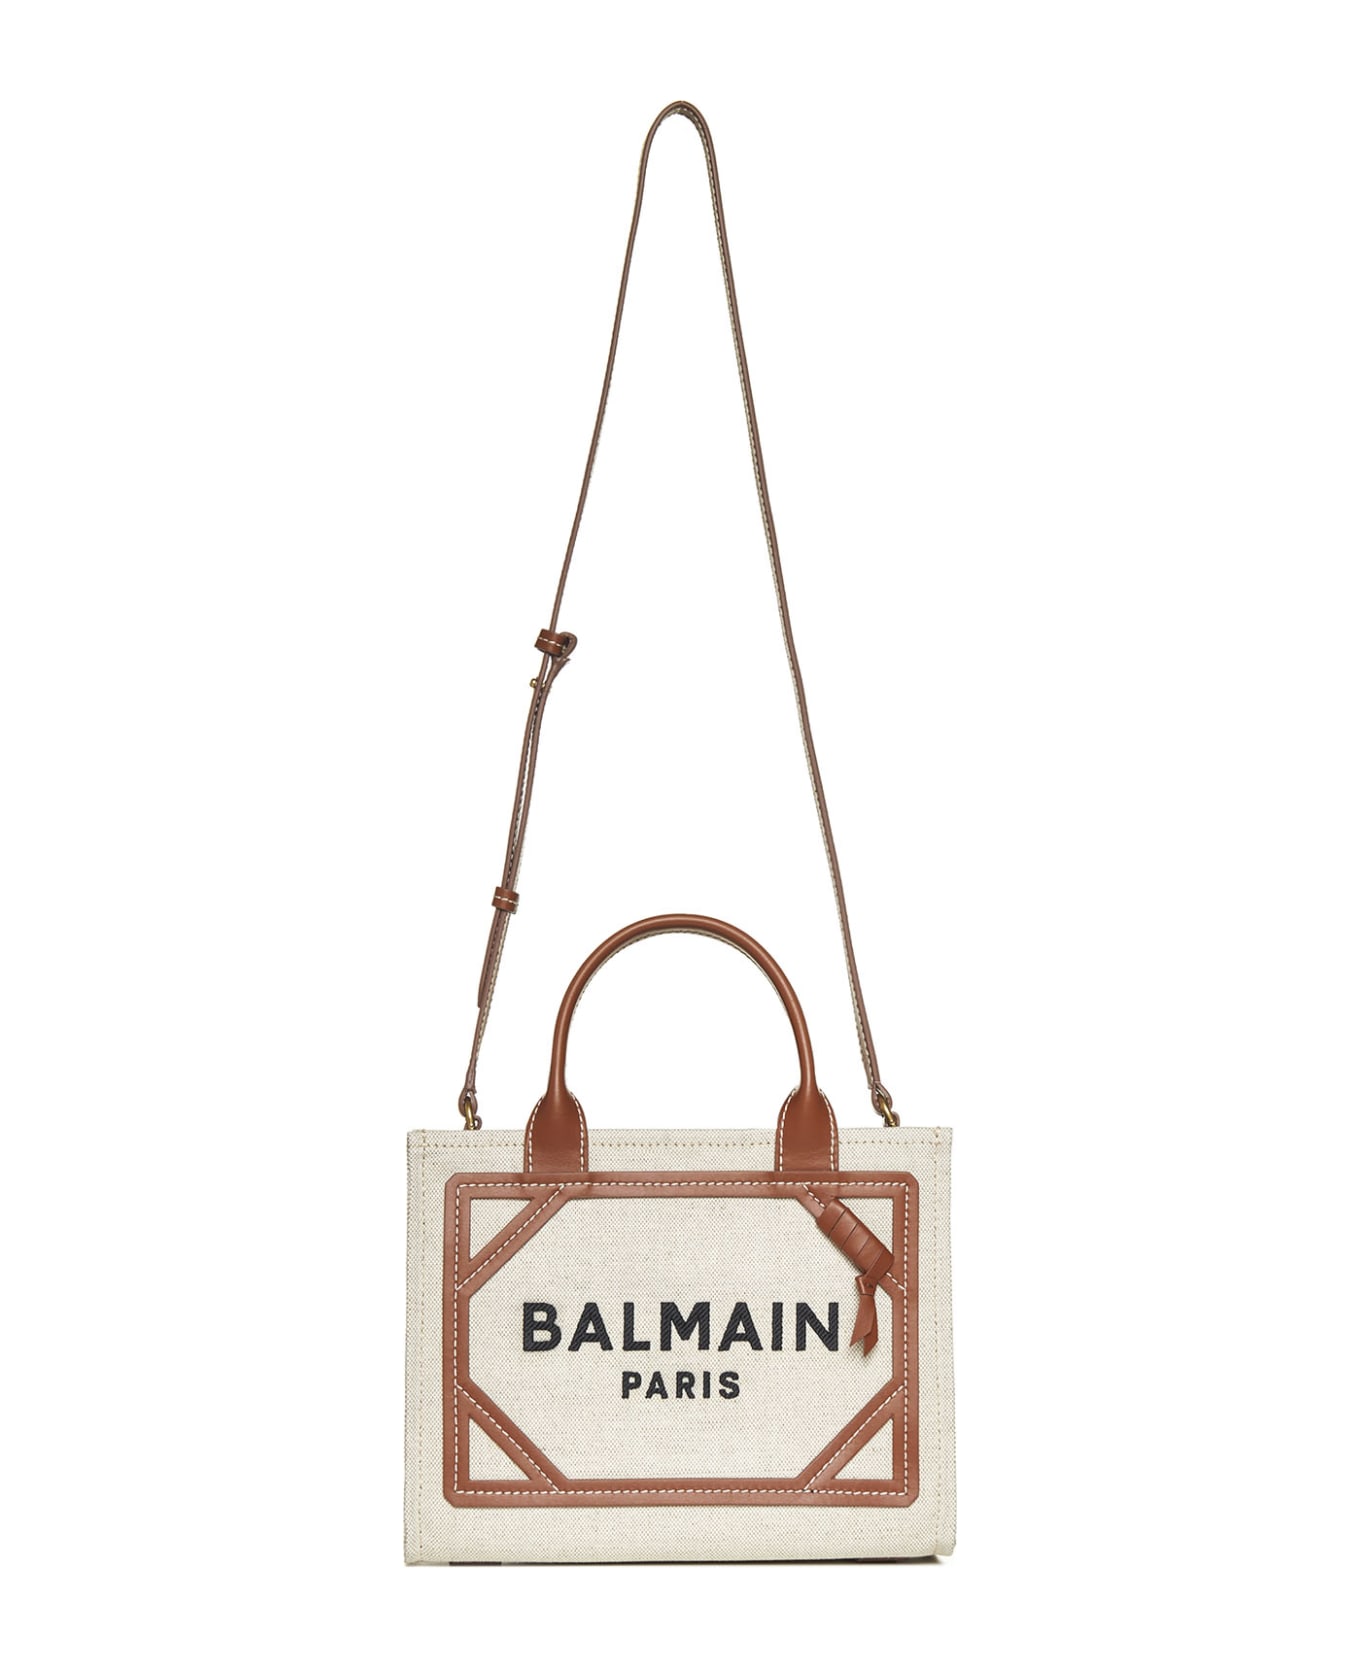 Balmain B-army Tote Bag - Naturel/Marron